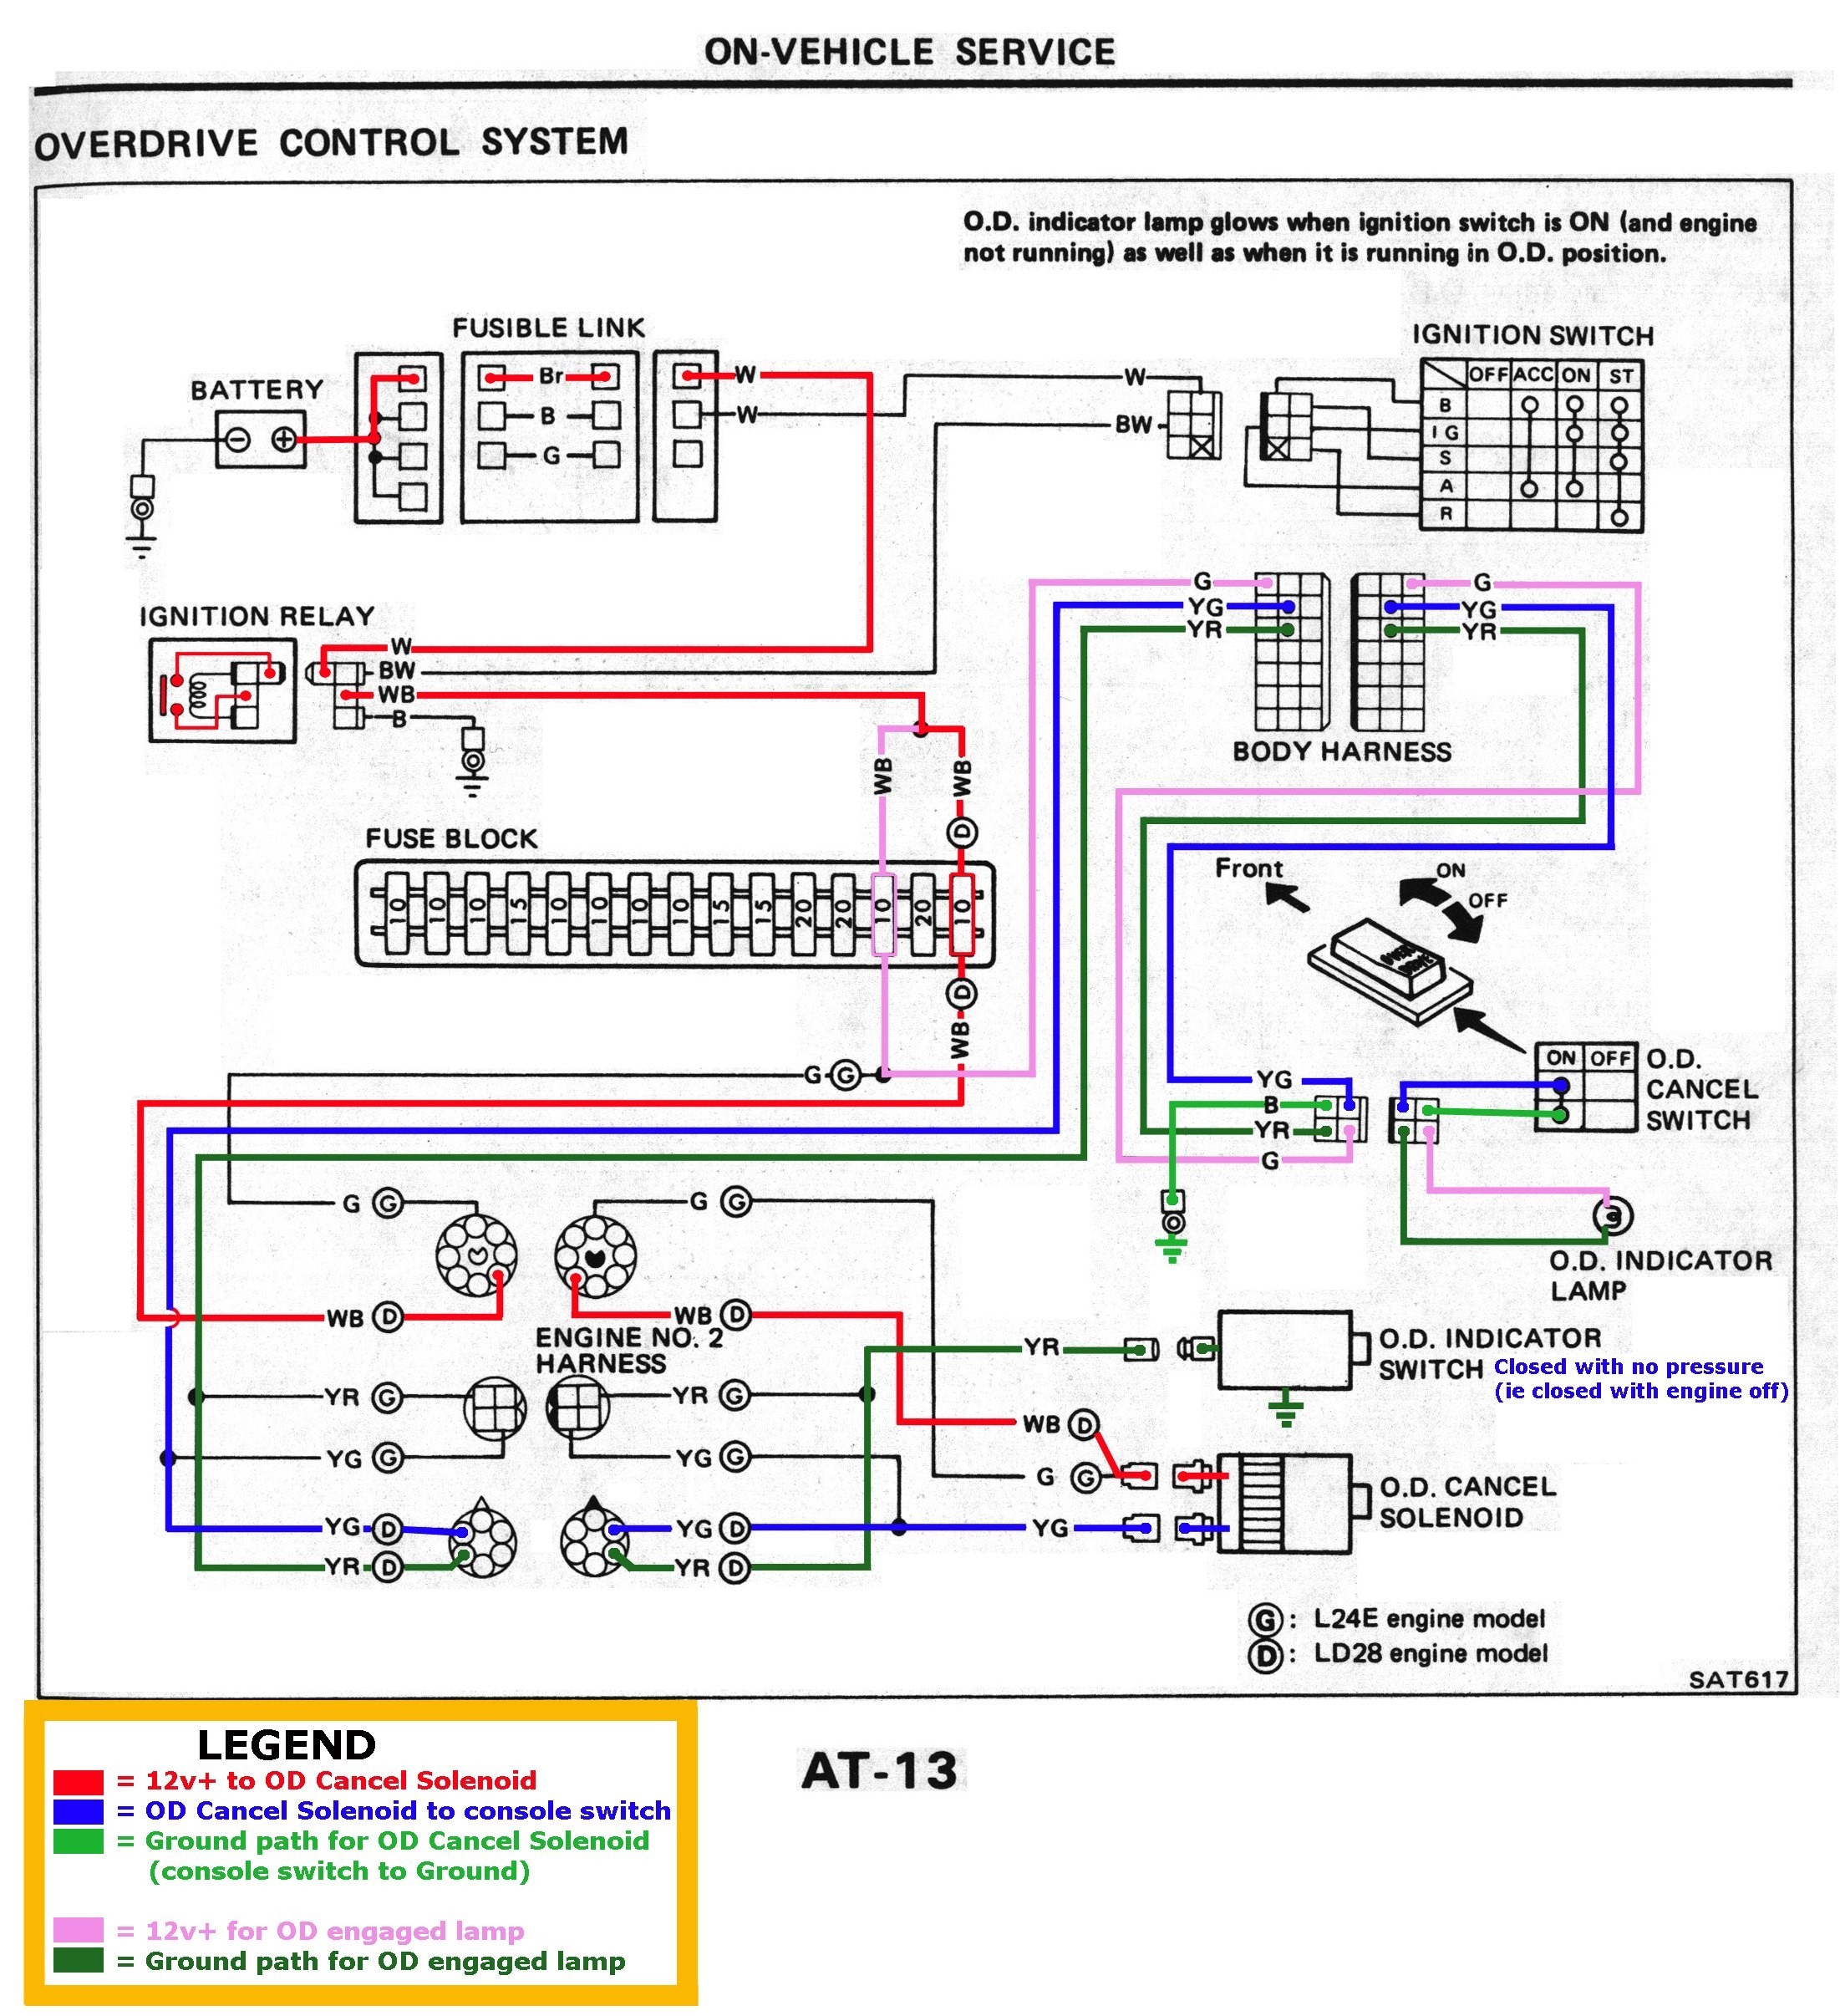 2005 Nissan Altima Engine Diagram Nissan Sentra Engine Diagram Of 2005 Nissan Altima Engine Diagram